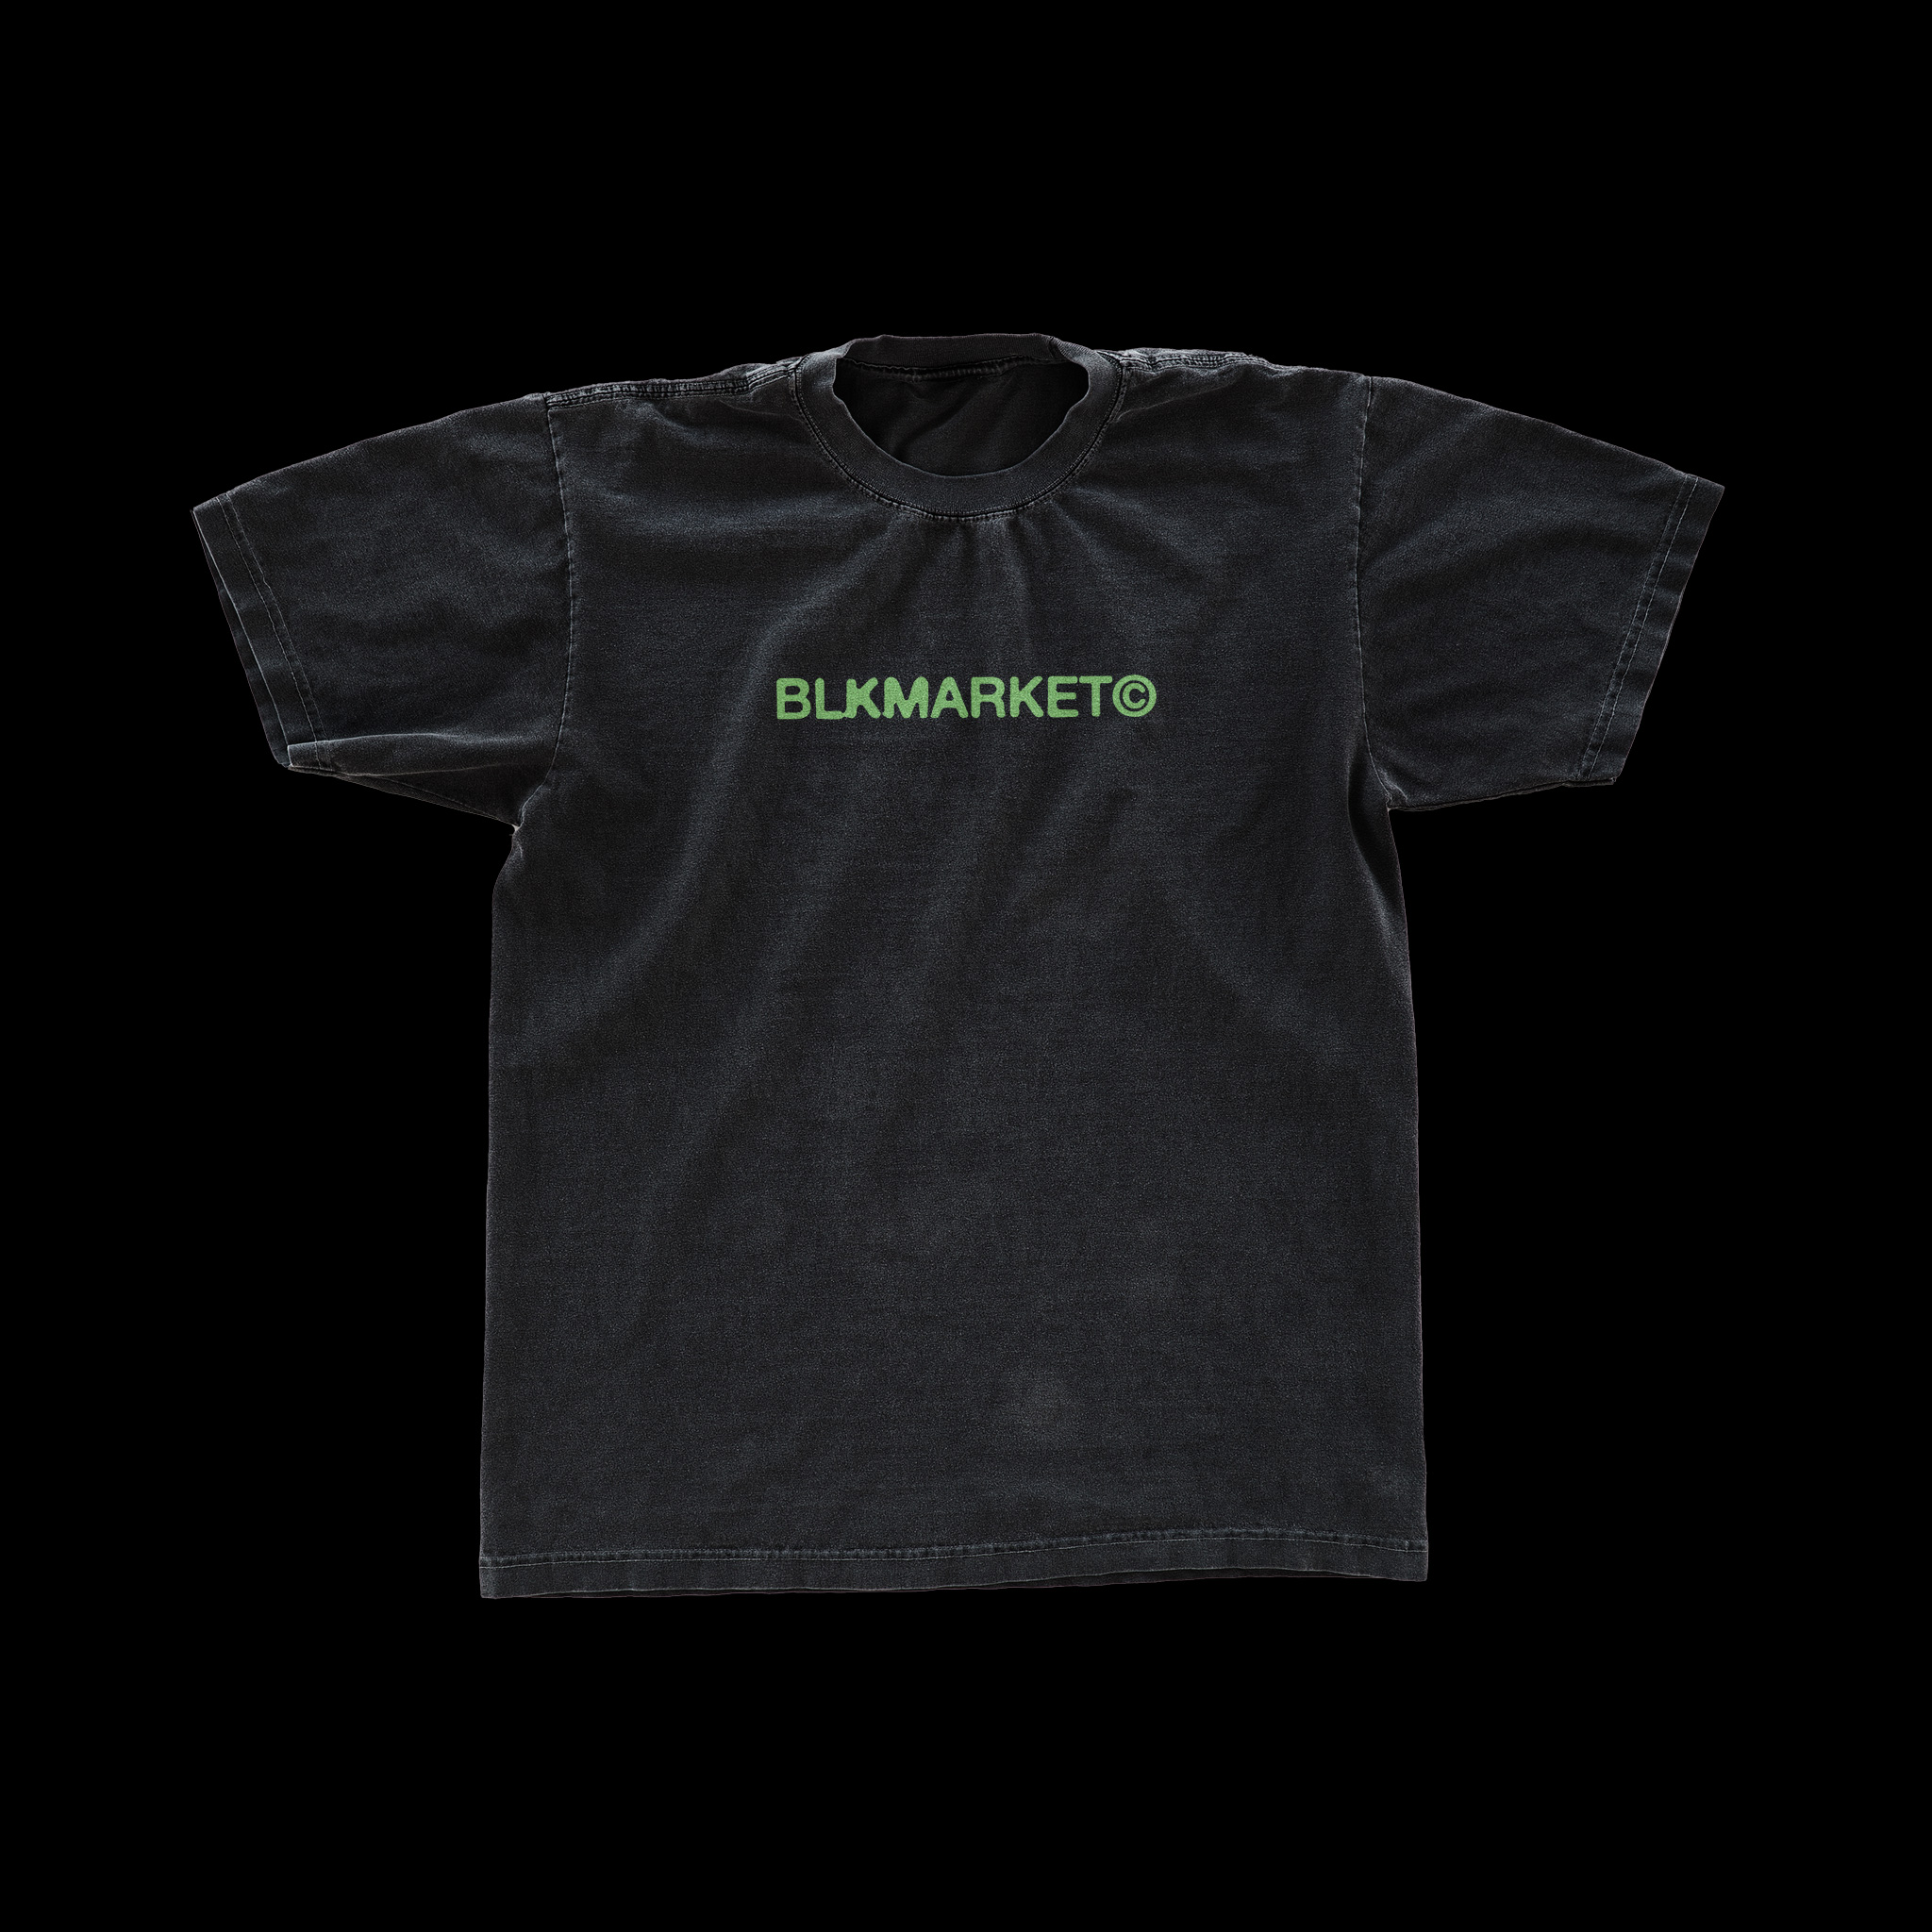 RetroTown Tees Baltimore Maryland Retro Vintage Weathered T-Shirt